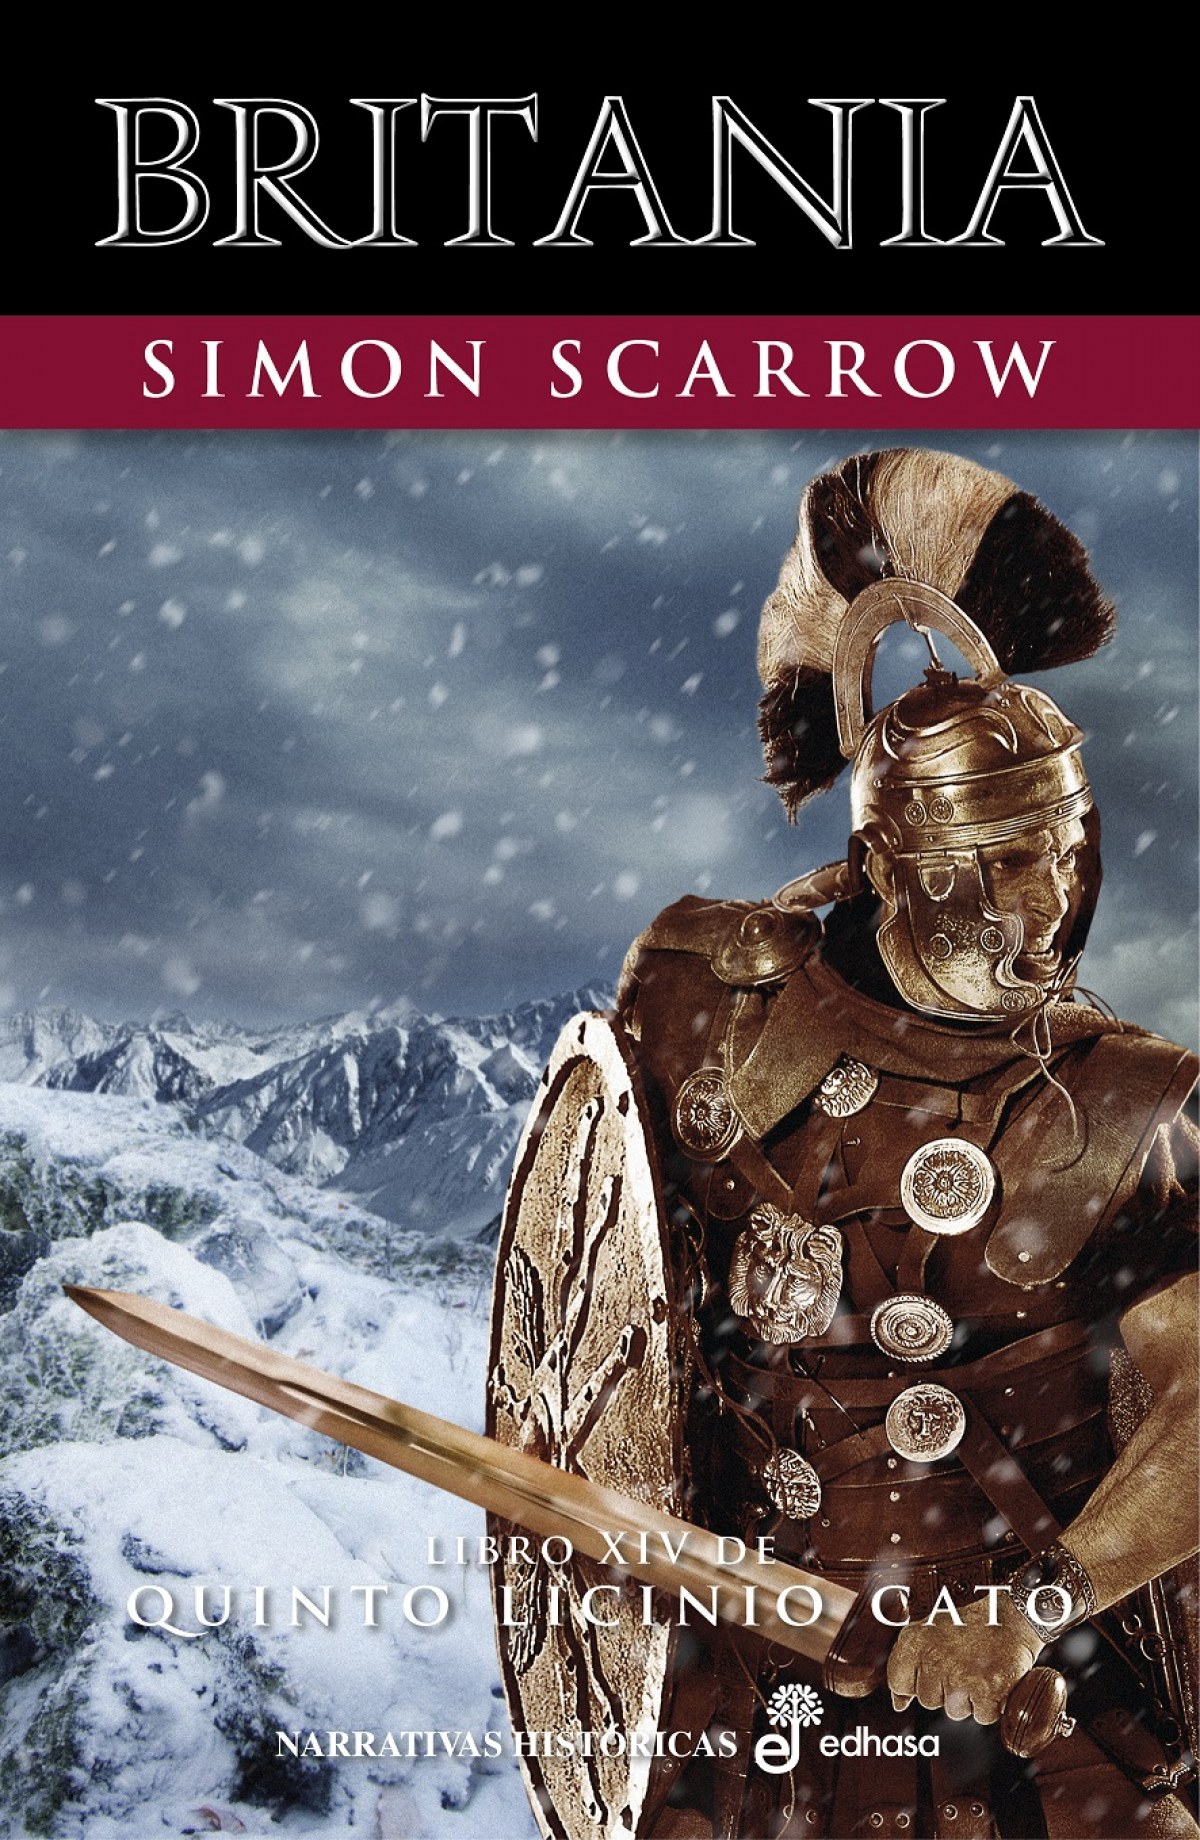 Britania - Scarrow Simon